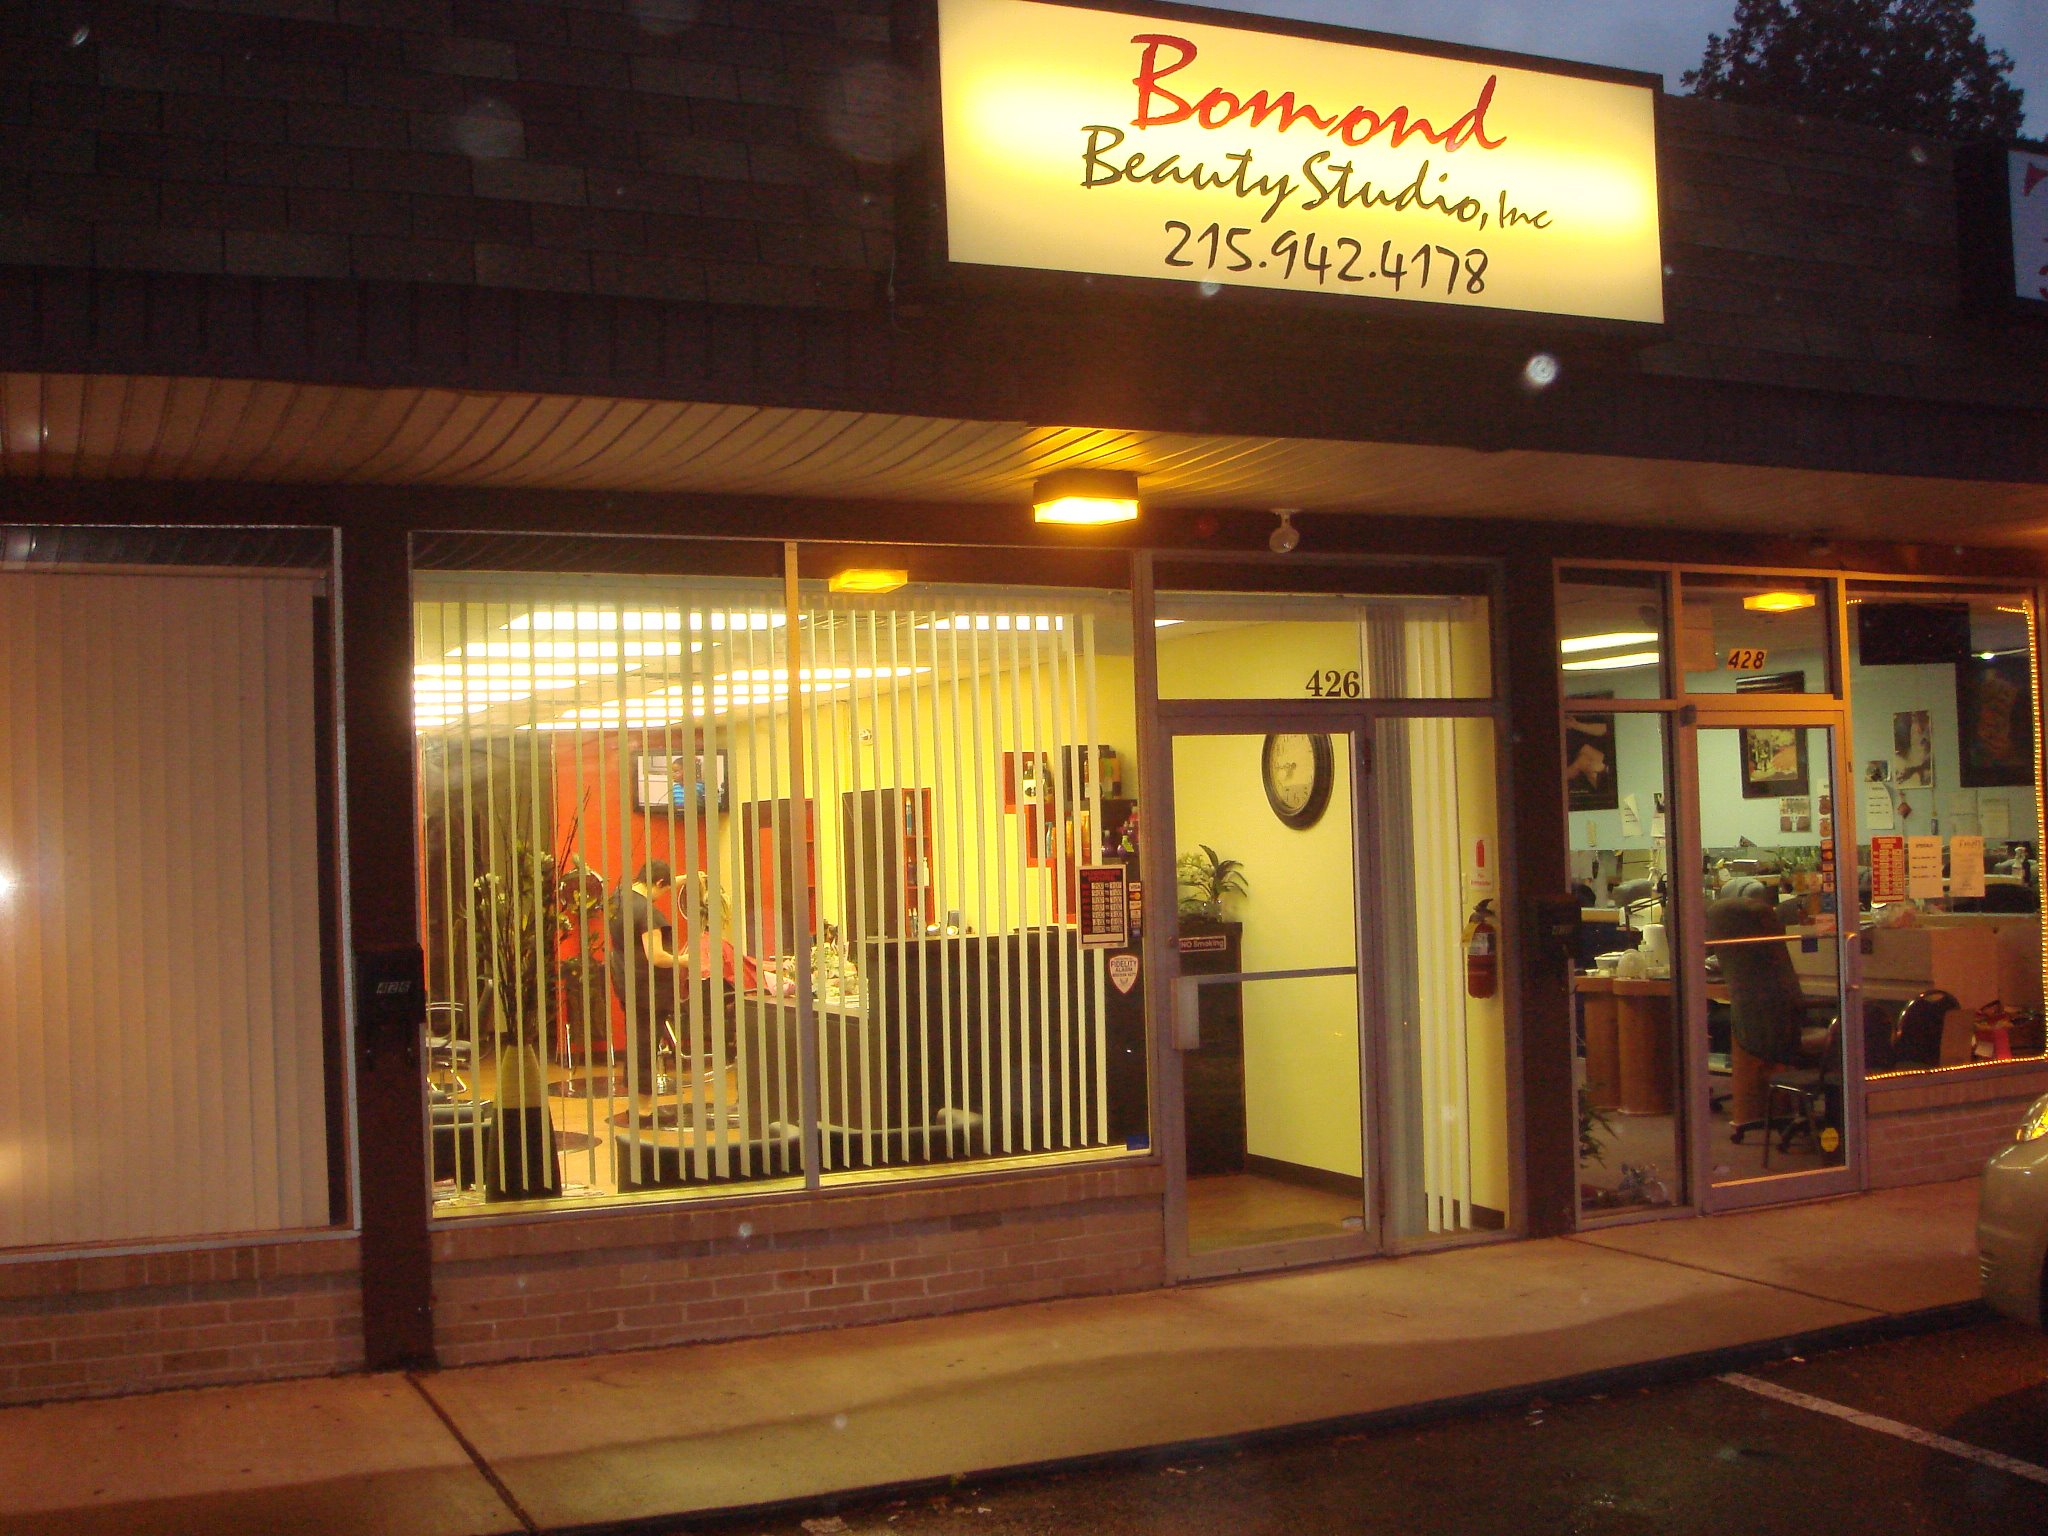 Bomond Beauty Studio 426 W St Rd, Trevose Pennsylvania 19053